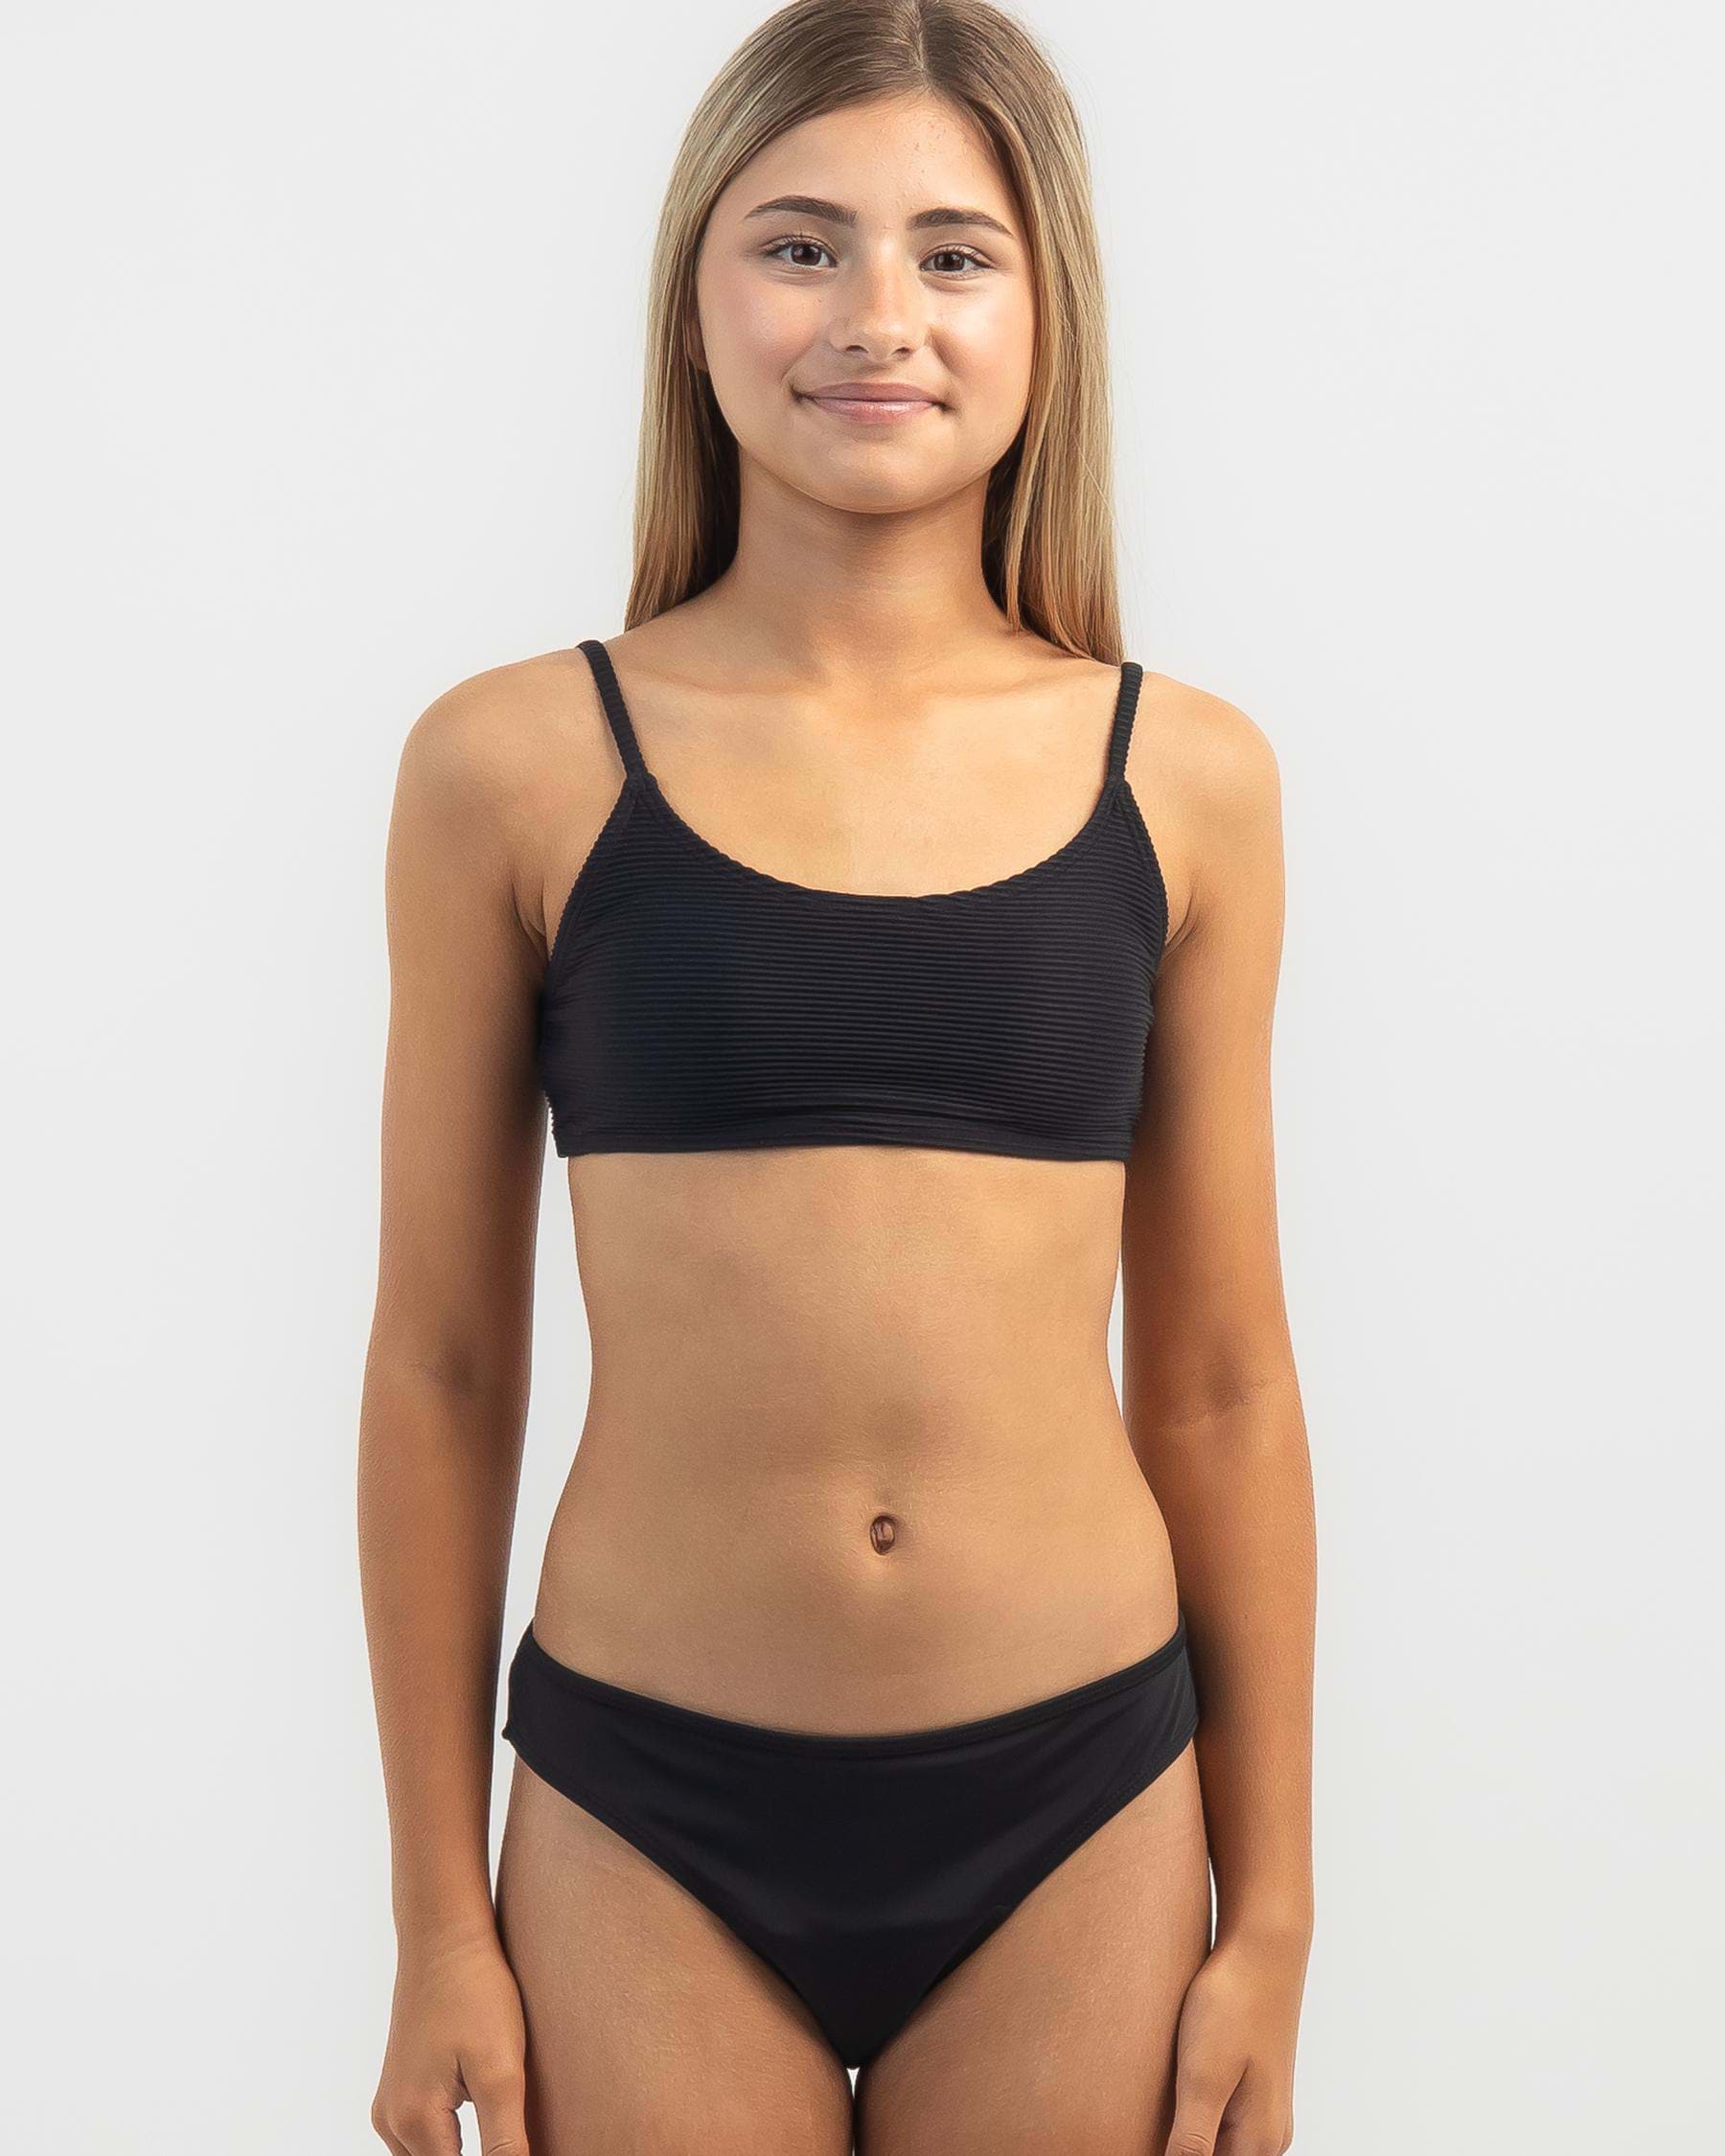 Modibodi Period Proof Swimwear NZ, Teens & Tweens